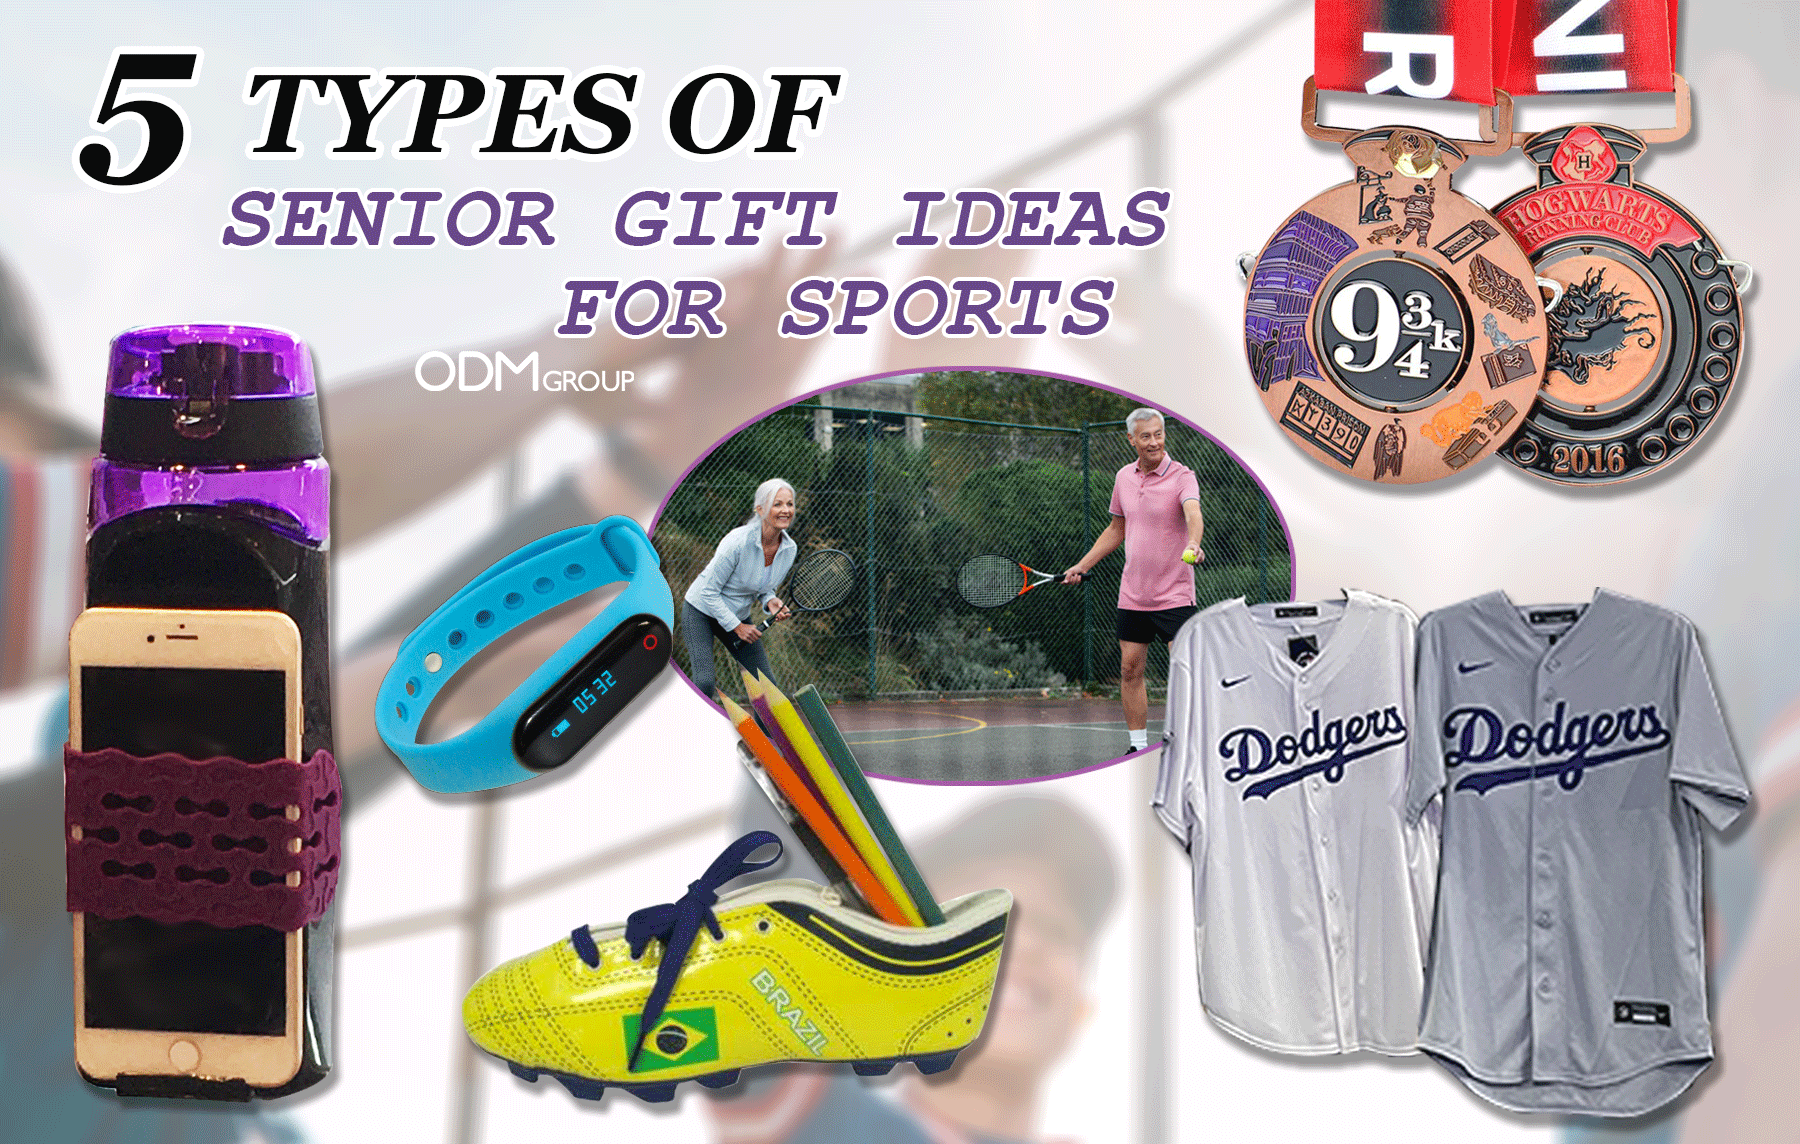 Senior Gift Ideas for Sports that Won't Break the Bank